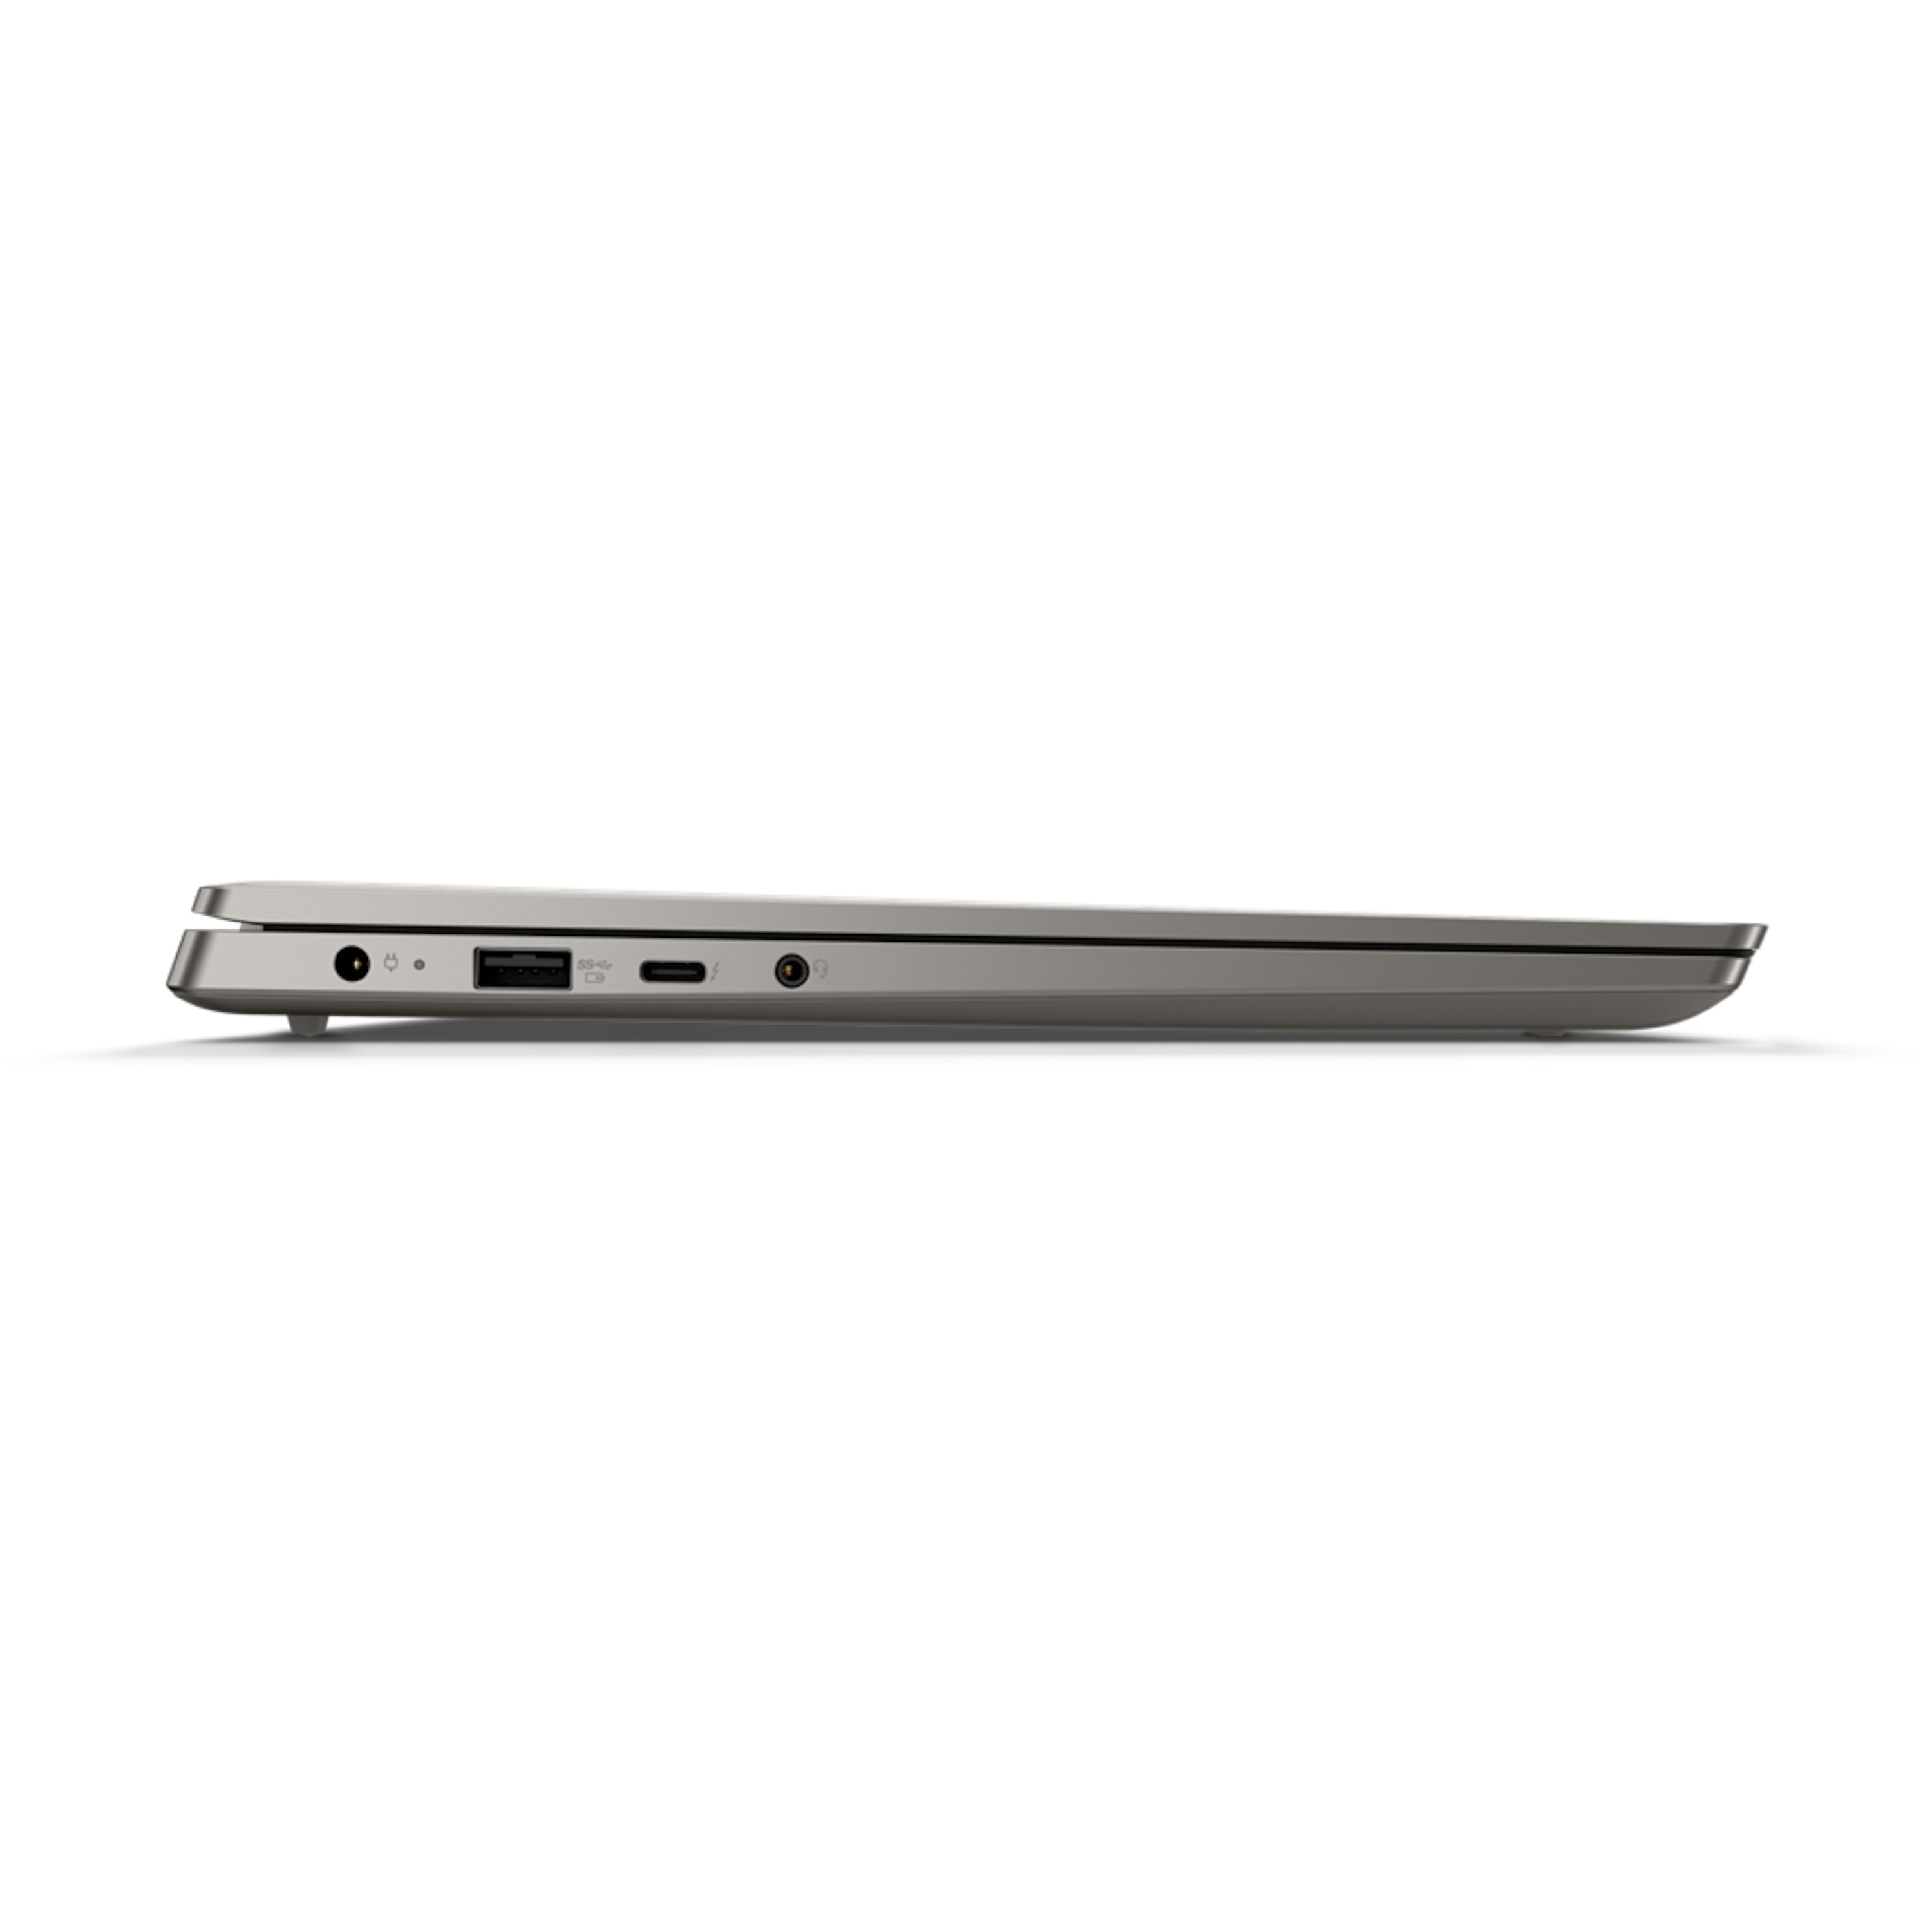 LENOVO Yoga S740-14IIL, Intel® Core™ i7-1065G7, Windows 10 Home, 35,6 cm (14") UHD Display, MX 250, 1 TB SSD, 16 GB RAM, Notebook (B-Ware)